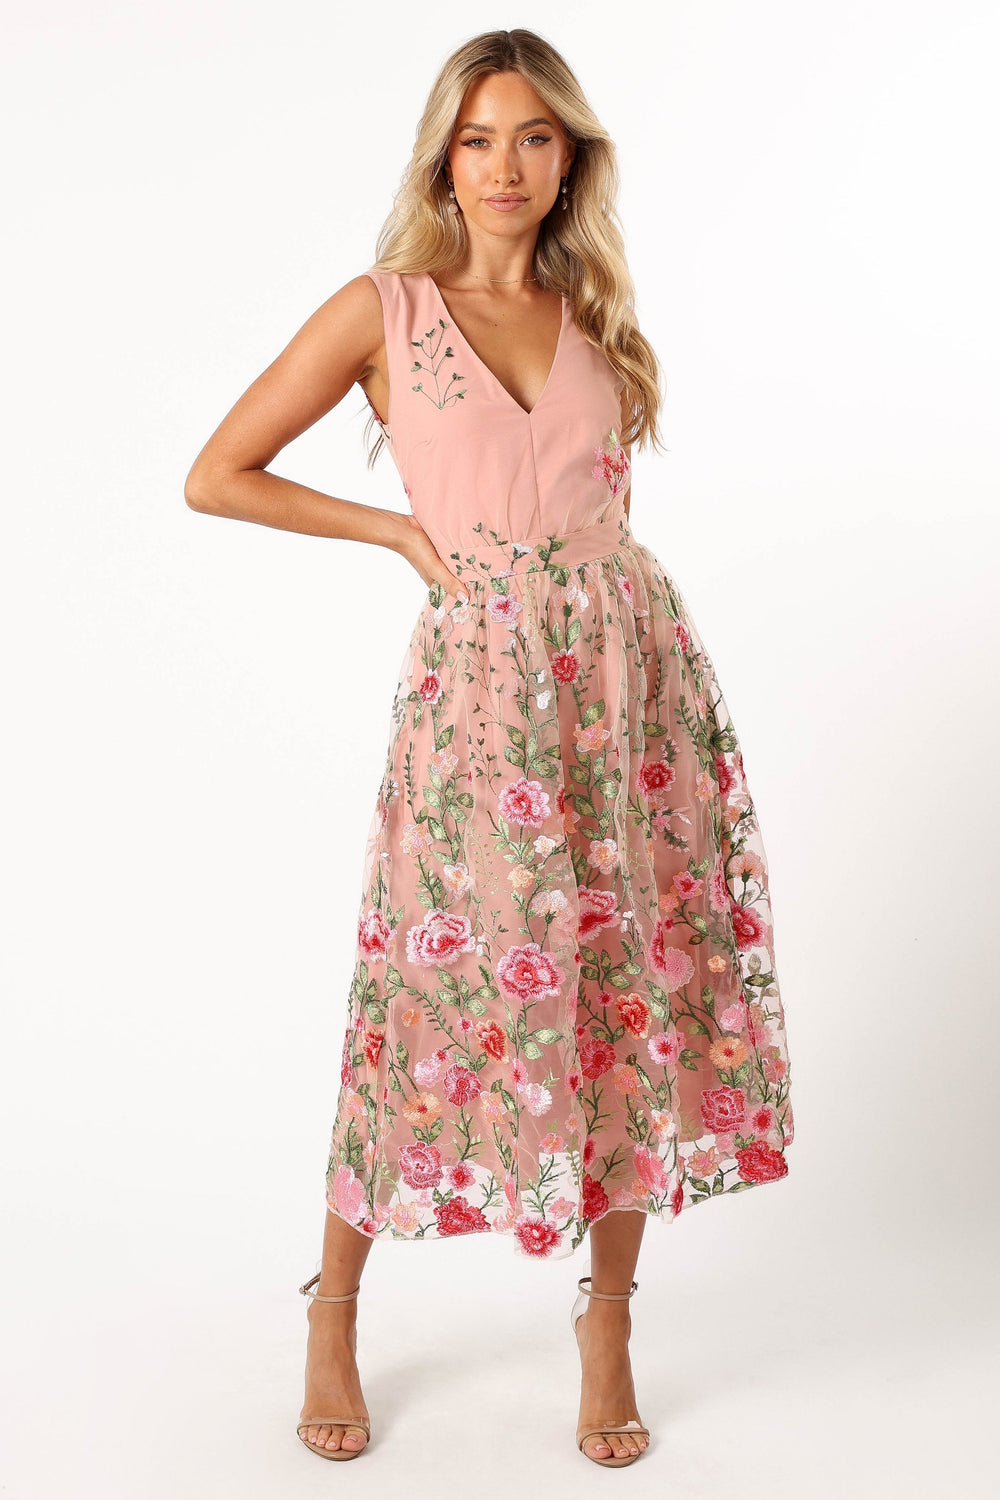 DRESSES @Wonderland Midi Dress - Pink Floral (Hold for Modern Romance)